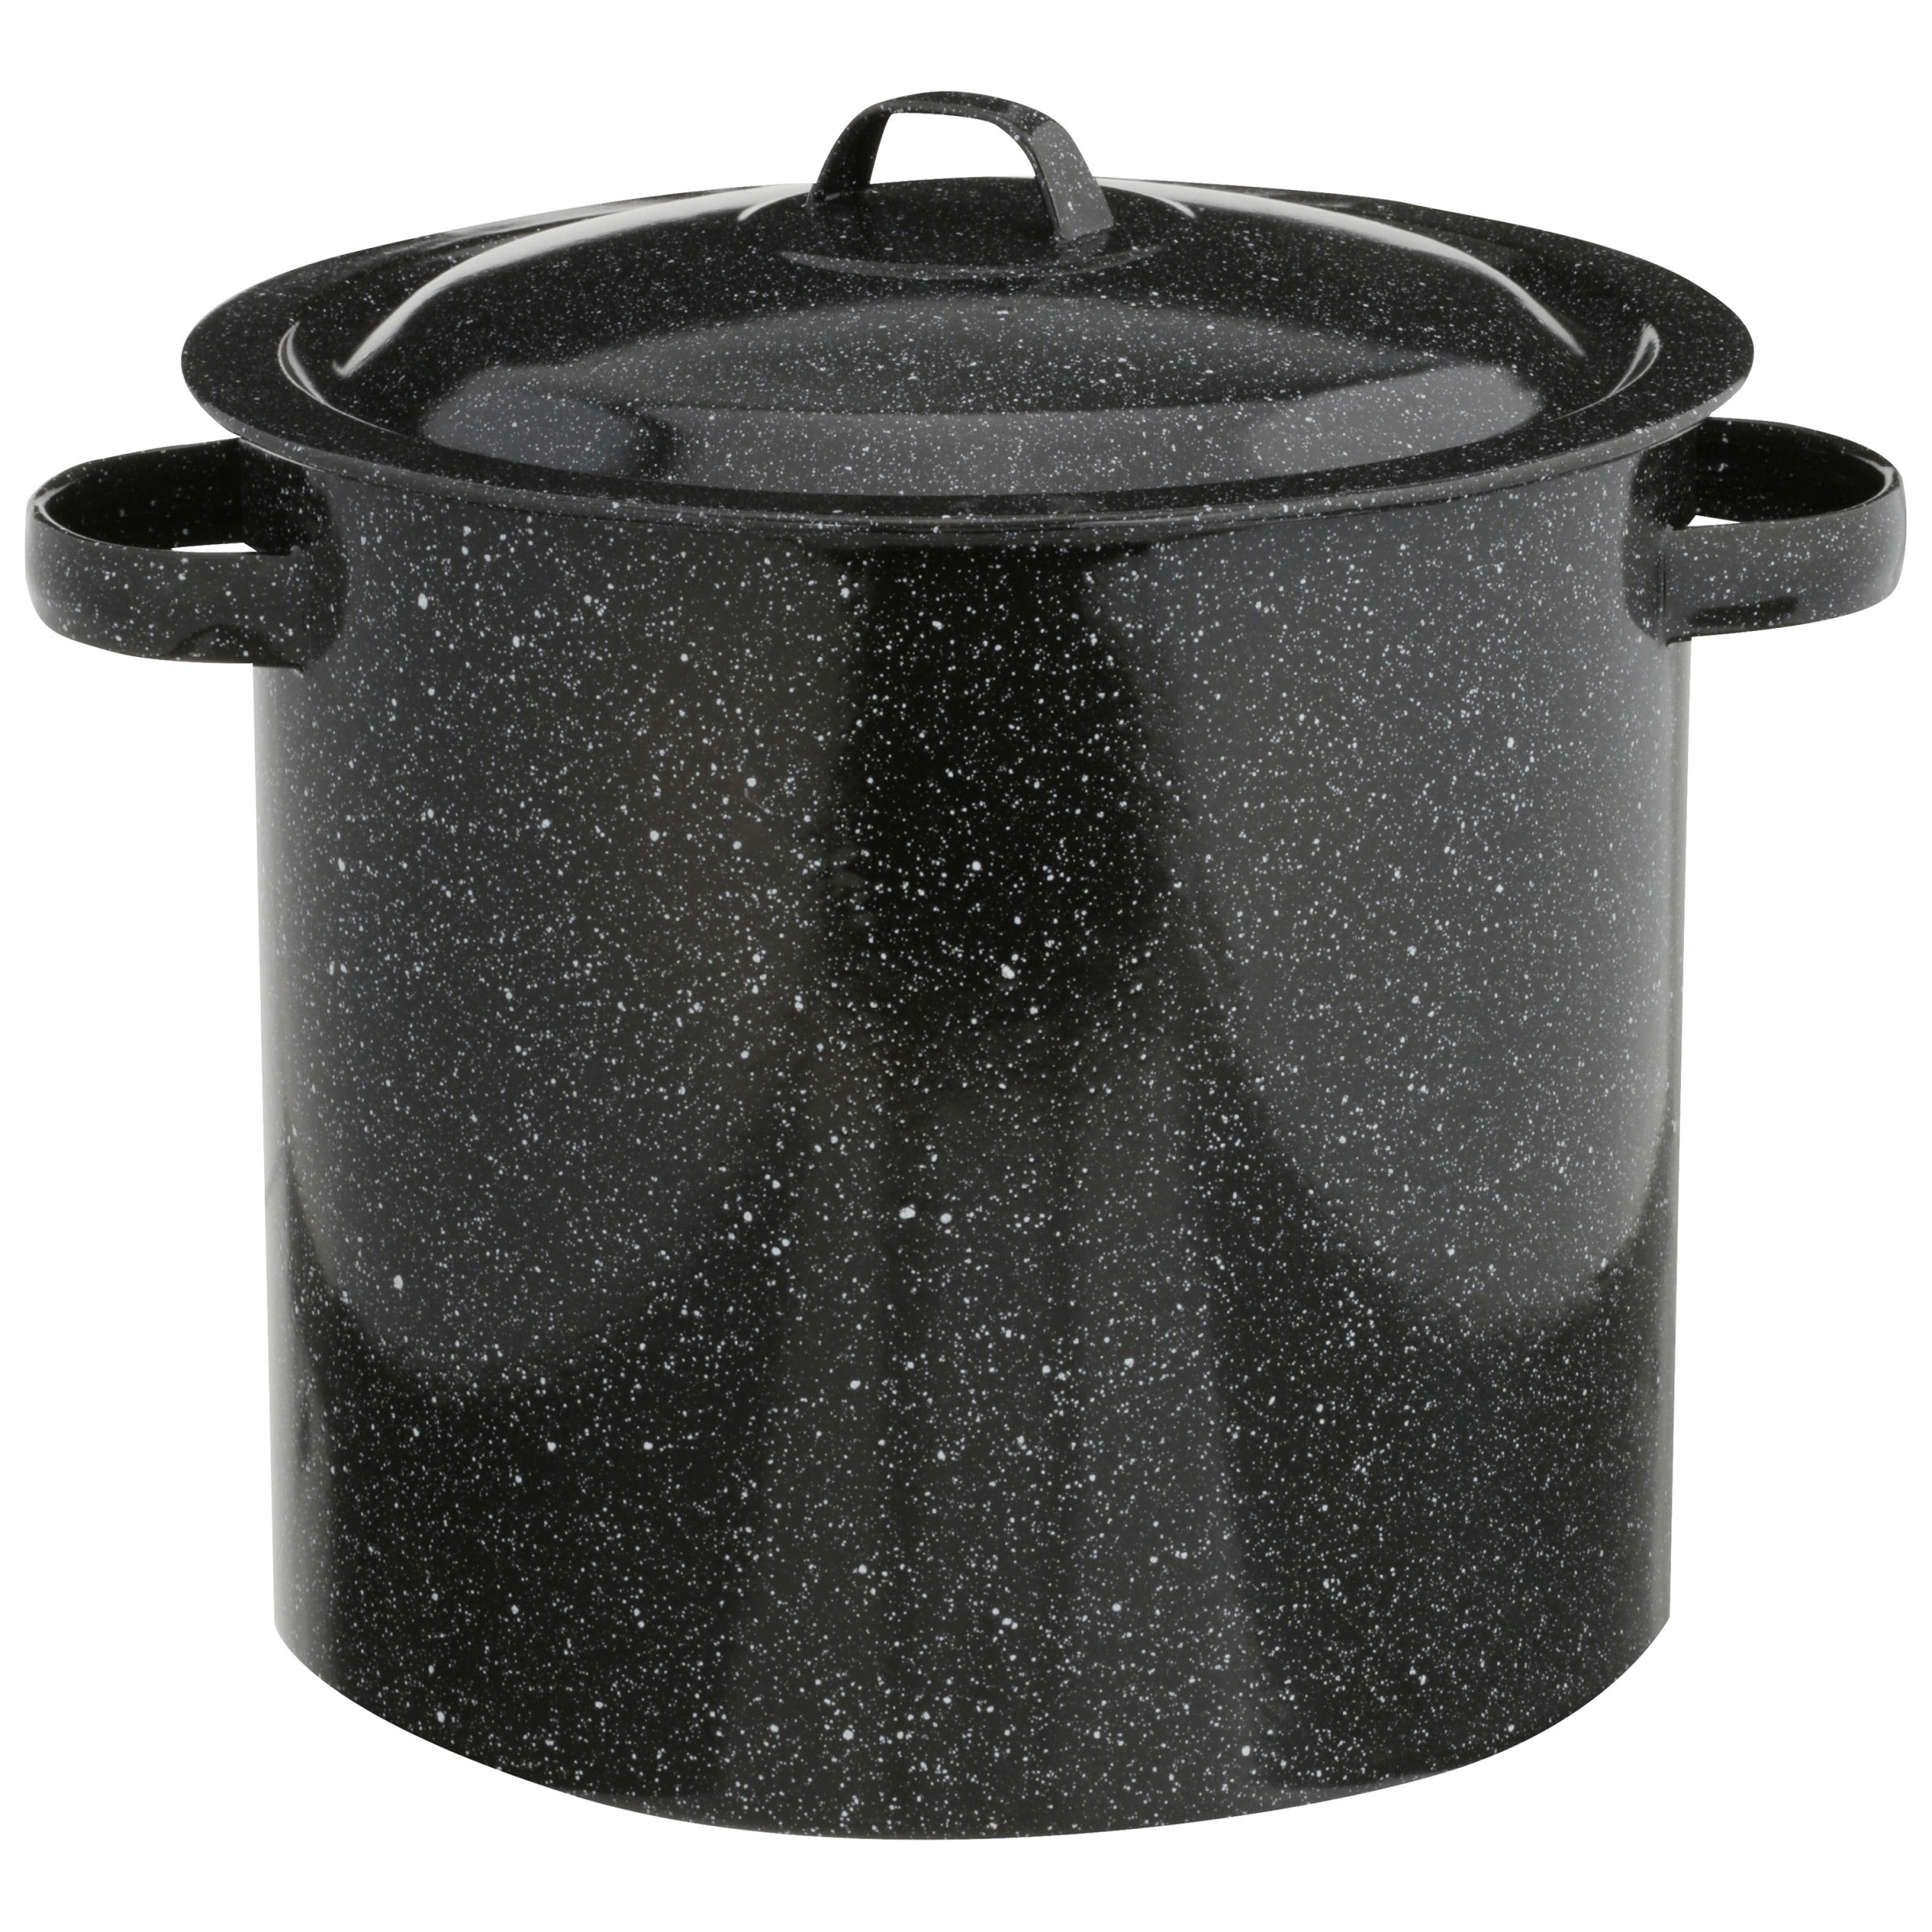 Granite-Ware Enamel on Steel 12 Quart Stock Pot with Lid - Black - image 1 of 5